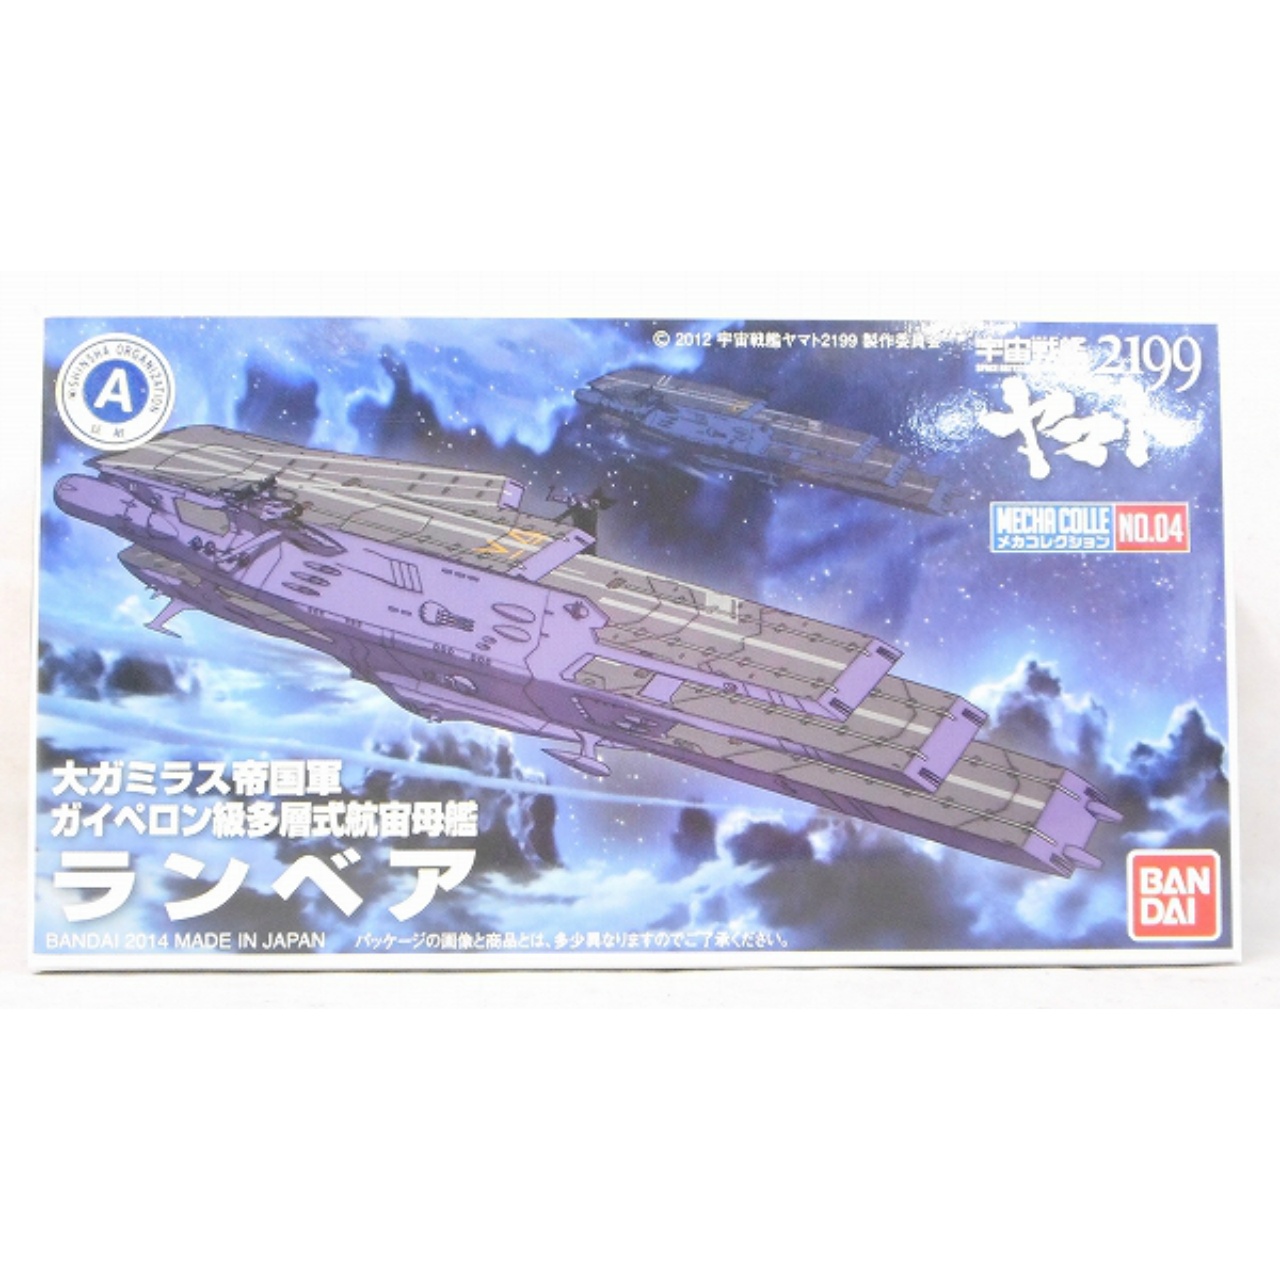 Bandai Plastic Model Space Battleship Yamato 2199 Mecha Collection No.04 - Lambea